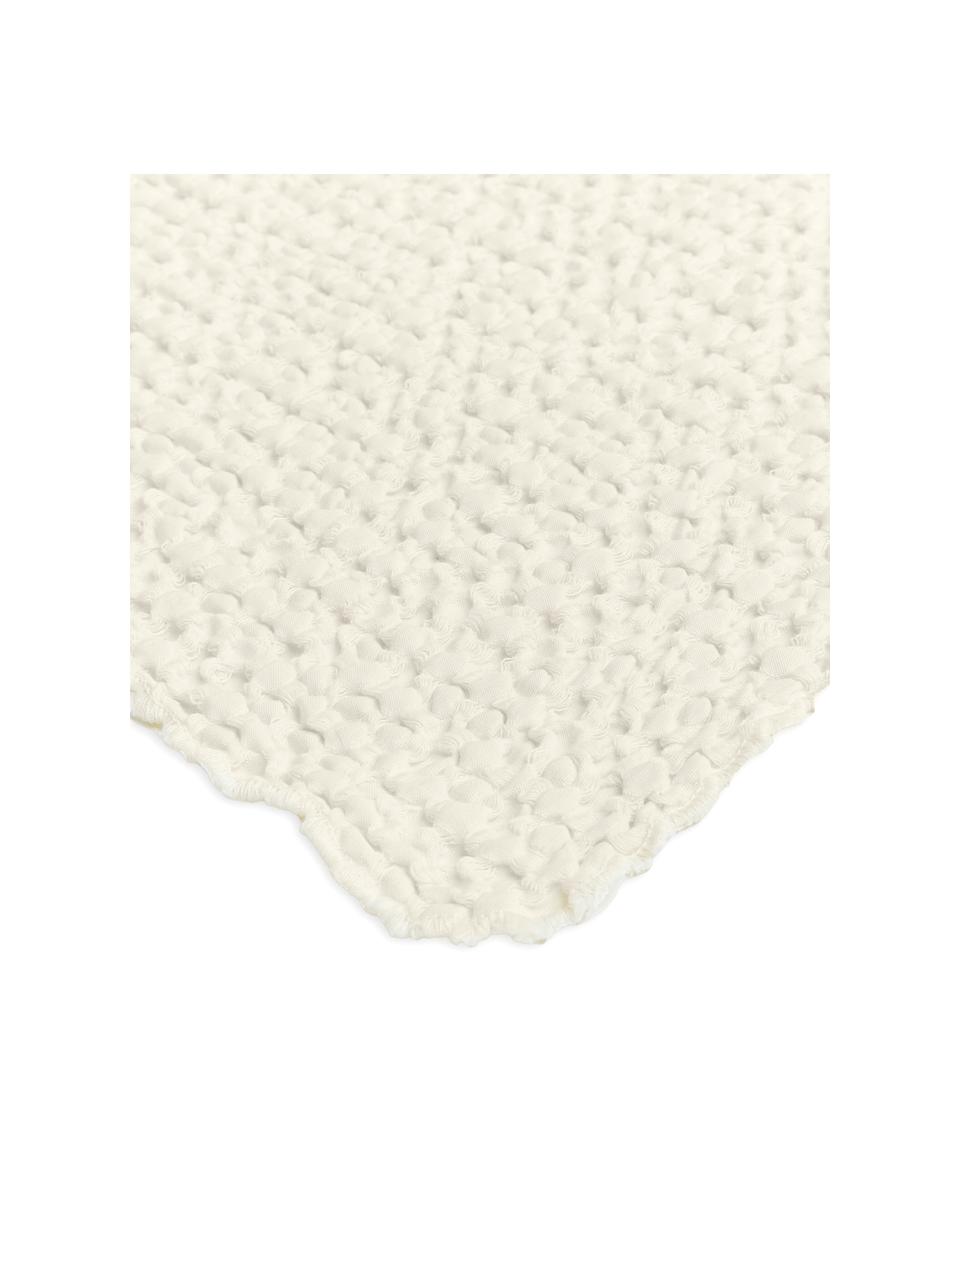 Colcha texturizada Vigo, 100% algodón, Creme, An 220 x L 240 cm (para camas de 160 x 200 cm)